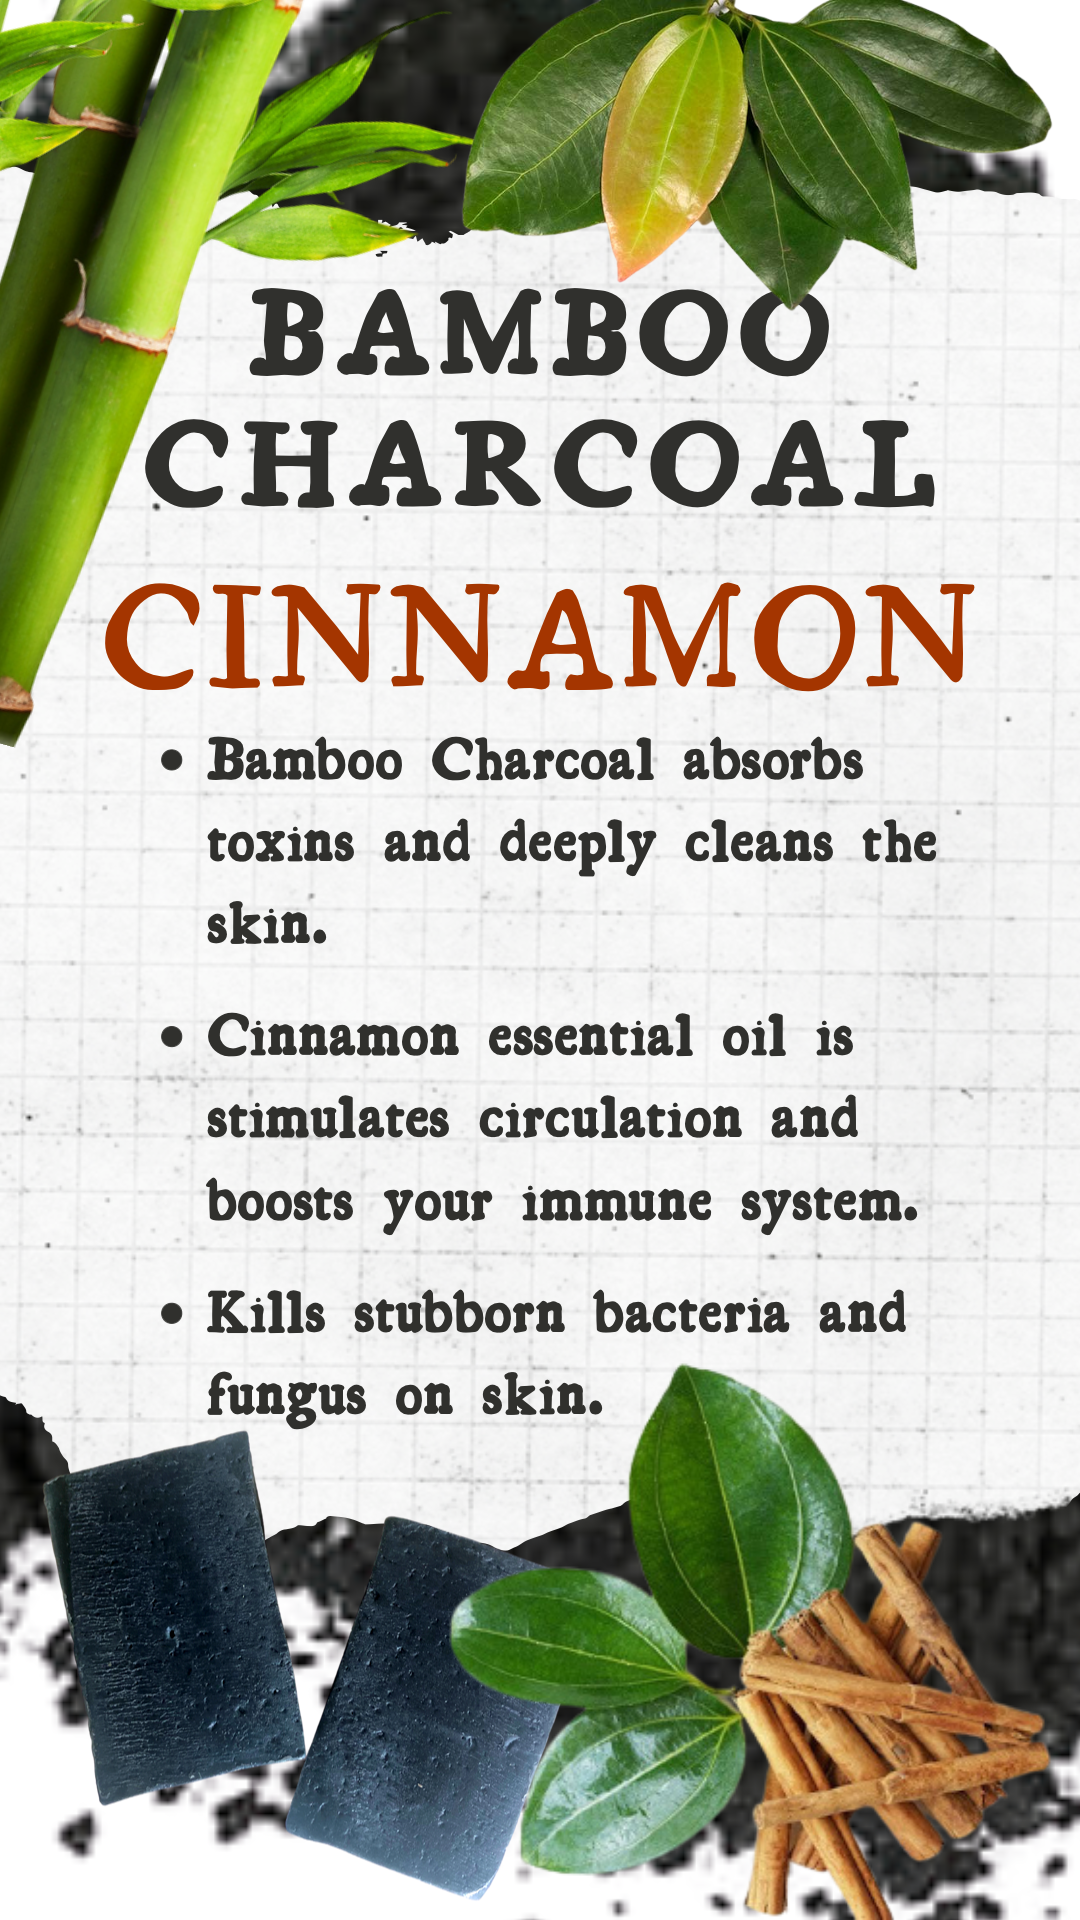 Bamboo Charcoal Cinnamon Soap